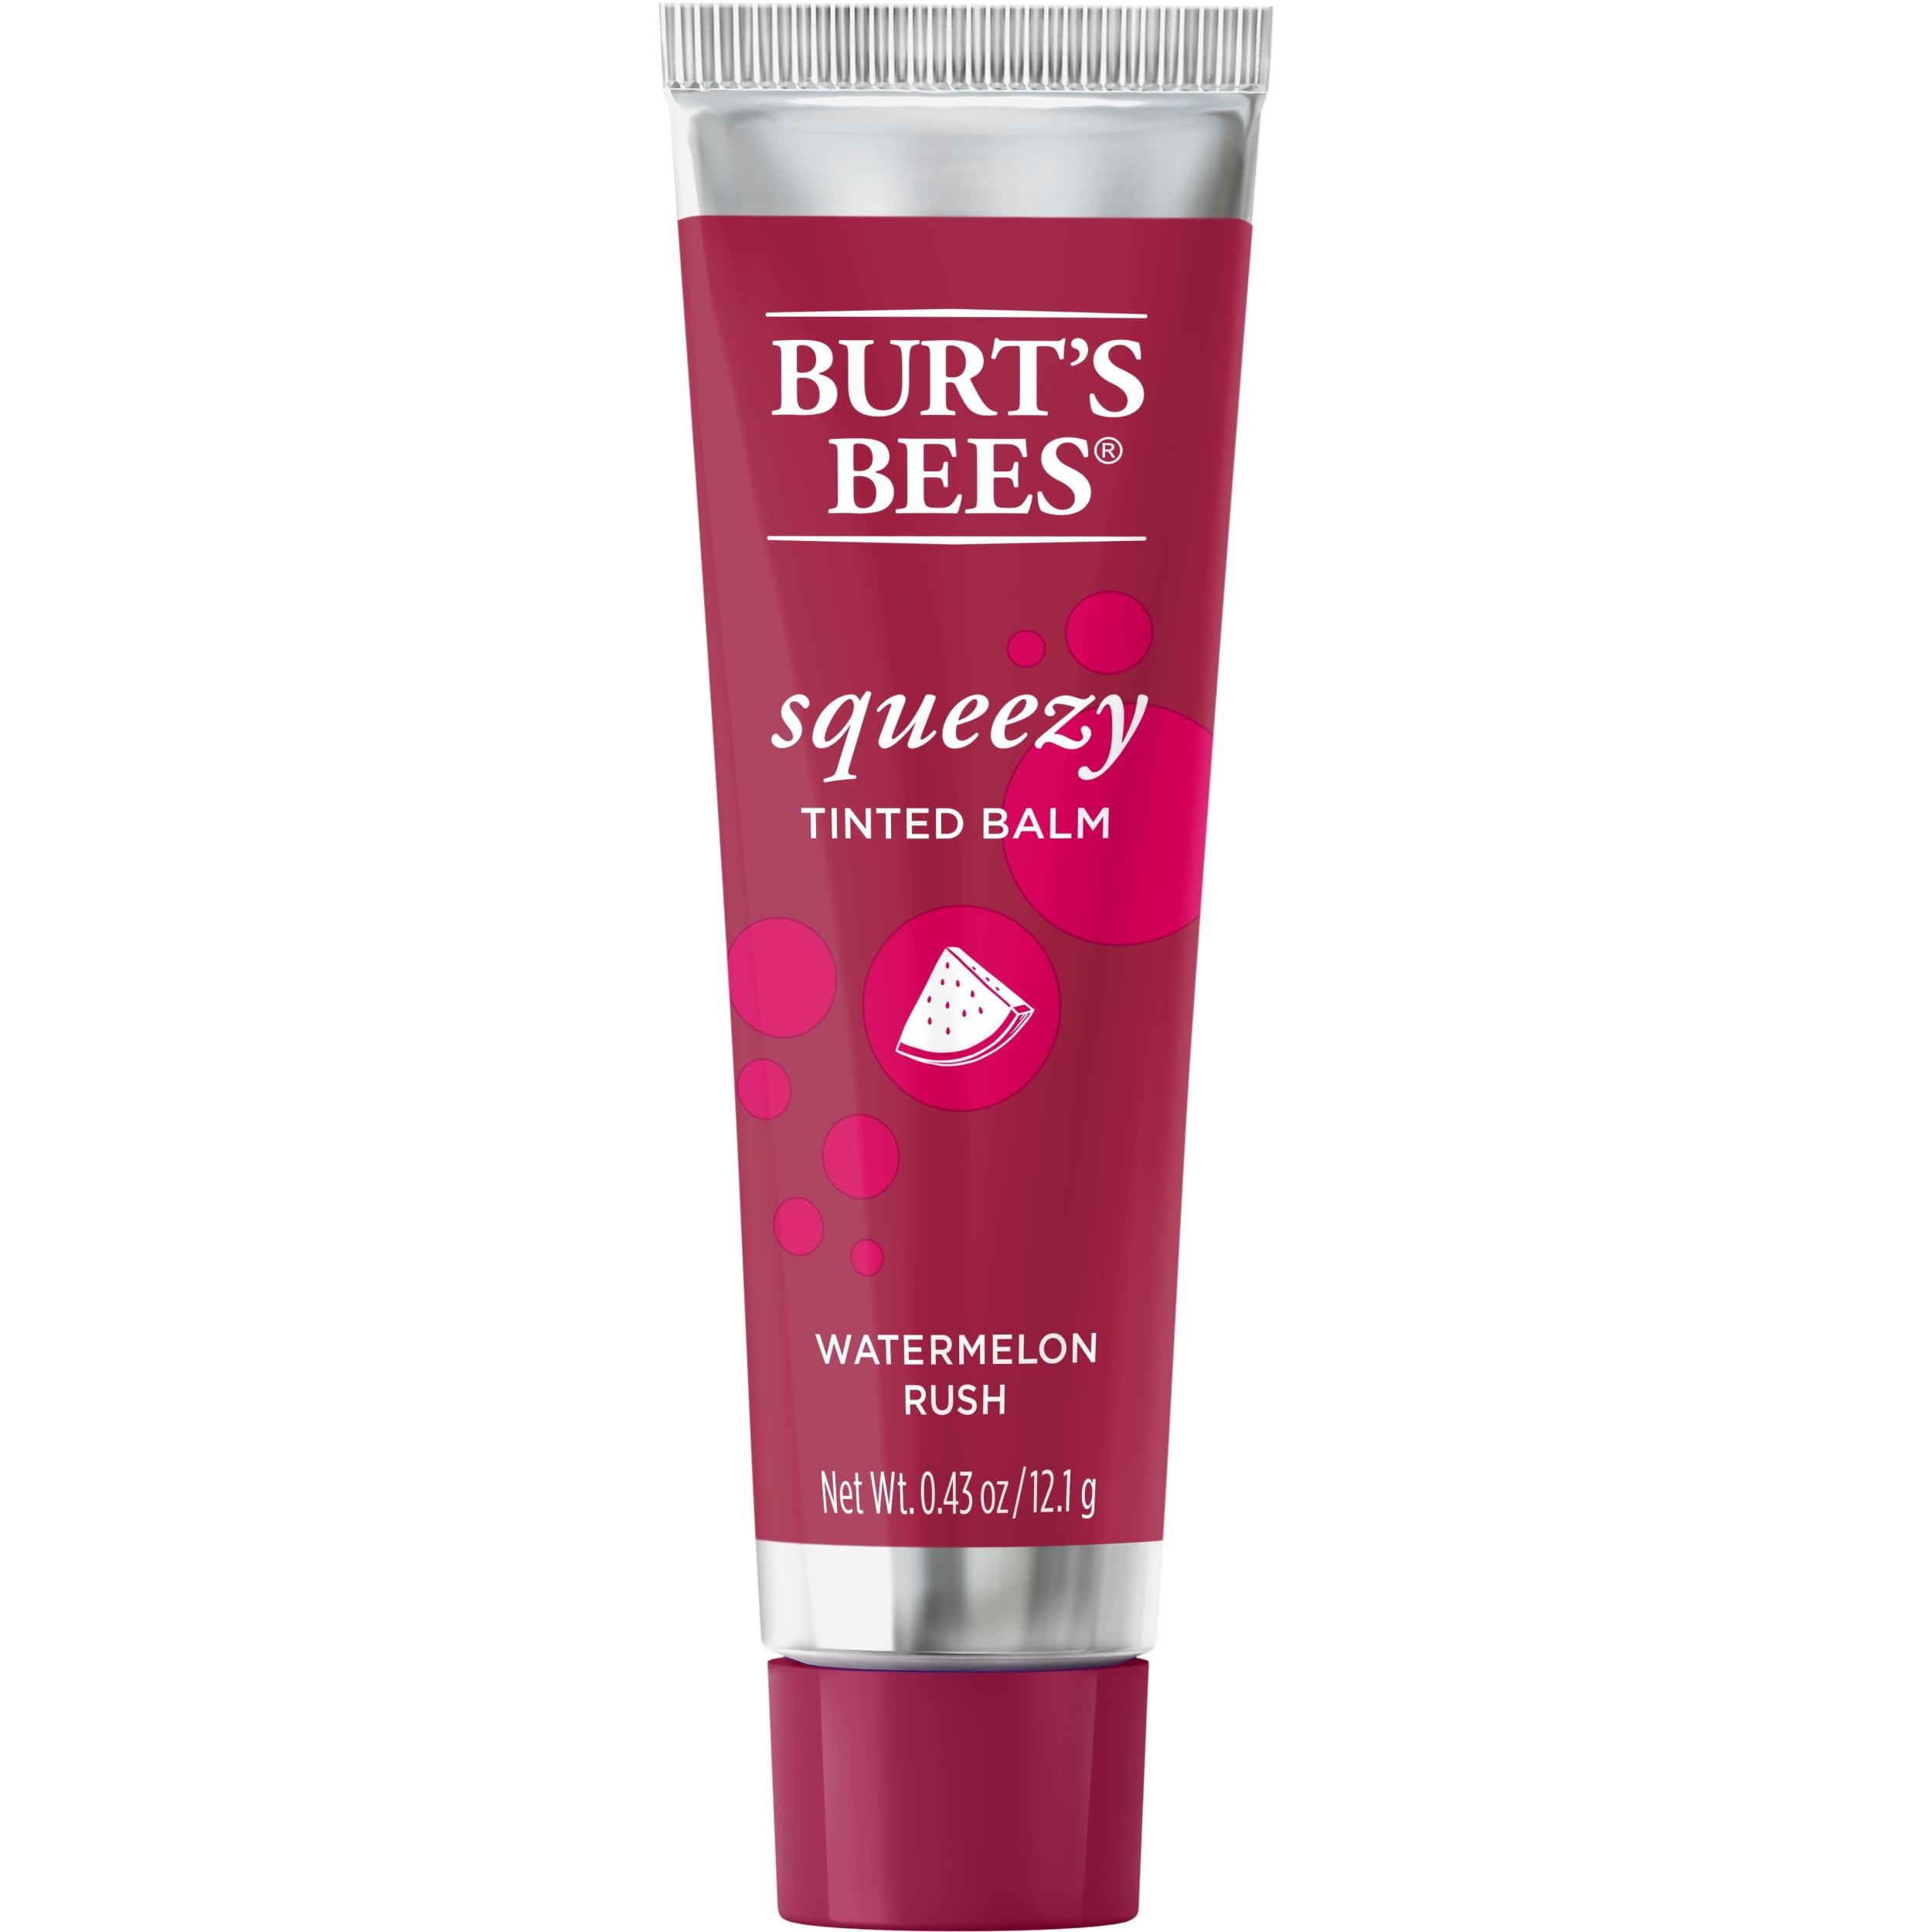 Burts Bees Lip Balm 7 Beeswax + 3 Ultra Conditioning 100% Natural